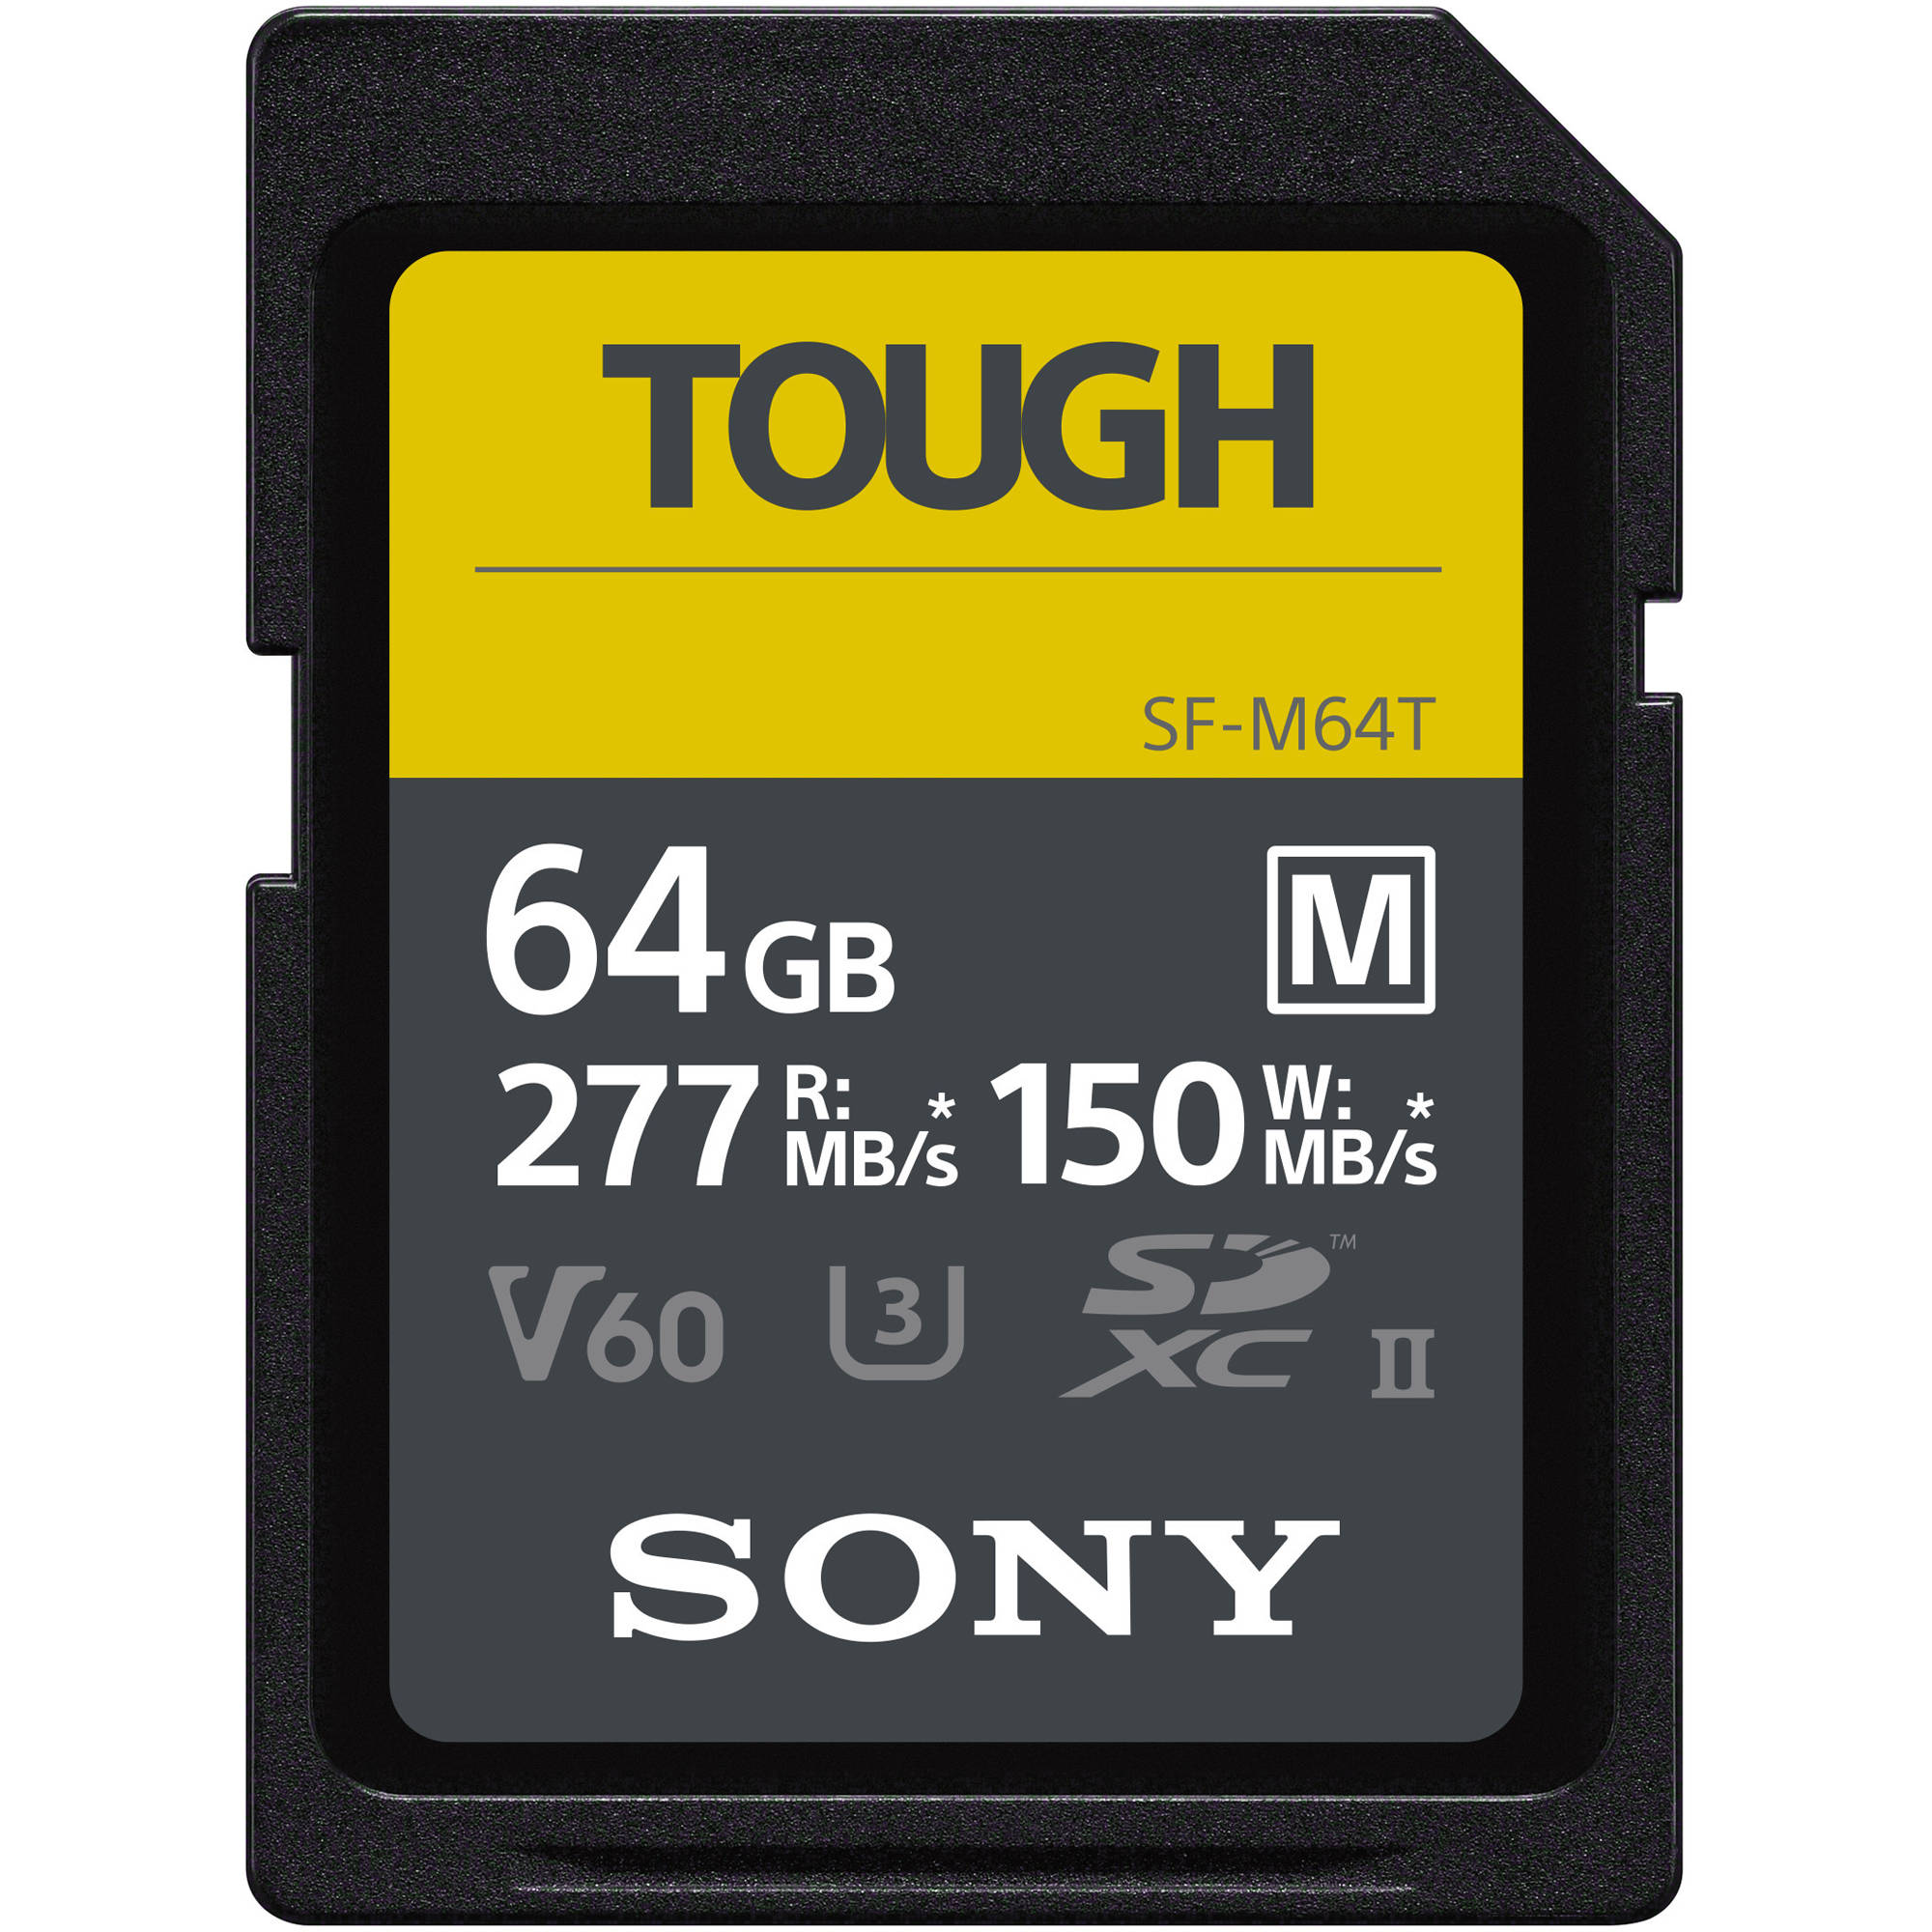 Sony SF-M TOUGH Series UHS-II SDXC Memory Card